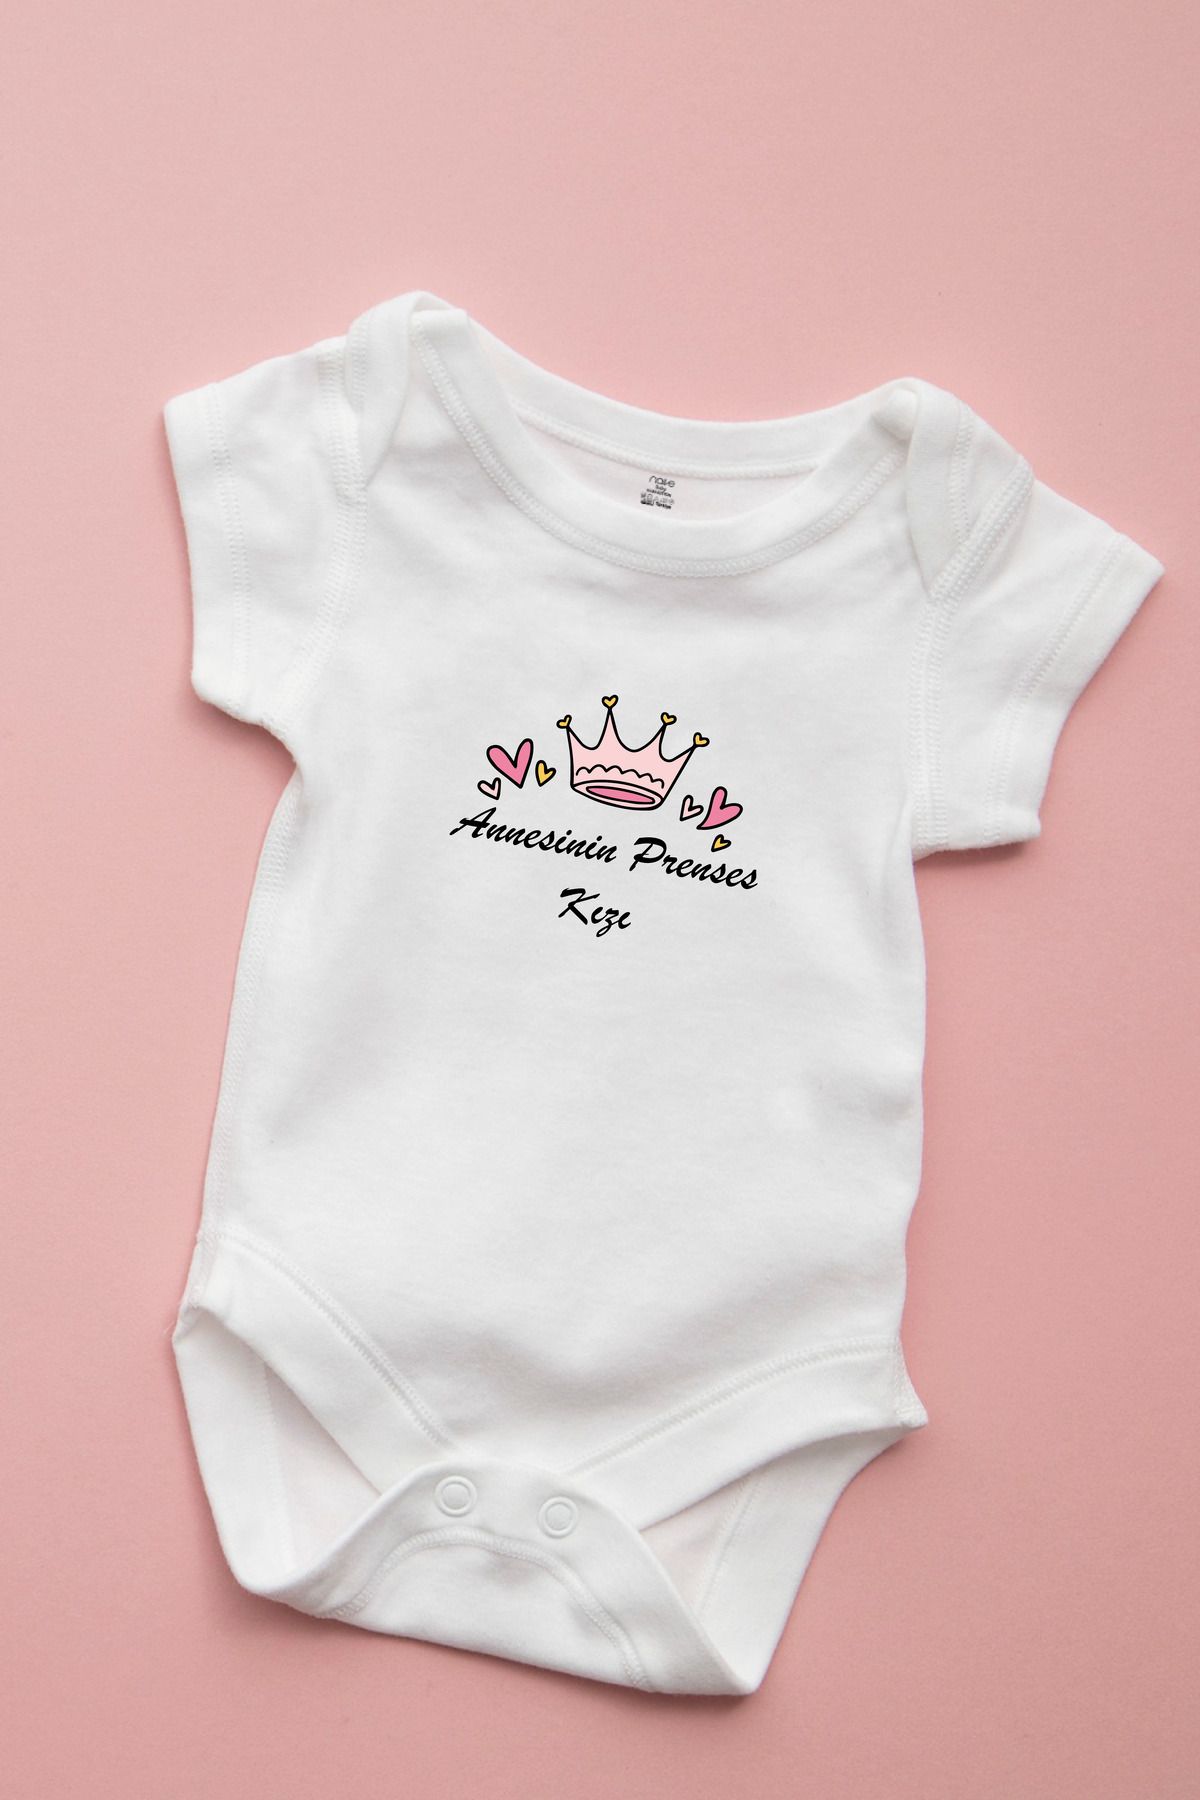 Naive Baby %100 Pamuklu Bebek Body - Annesinin Prenses Kızı - Bebek Zıbın Badi